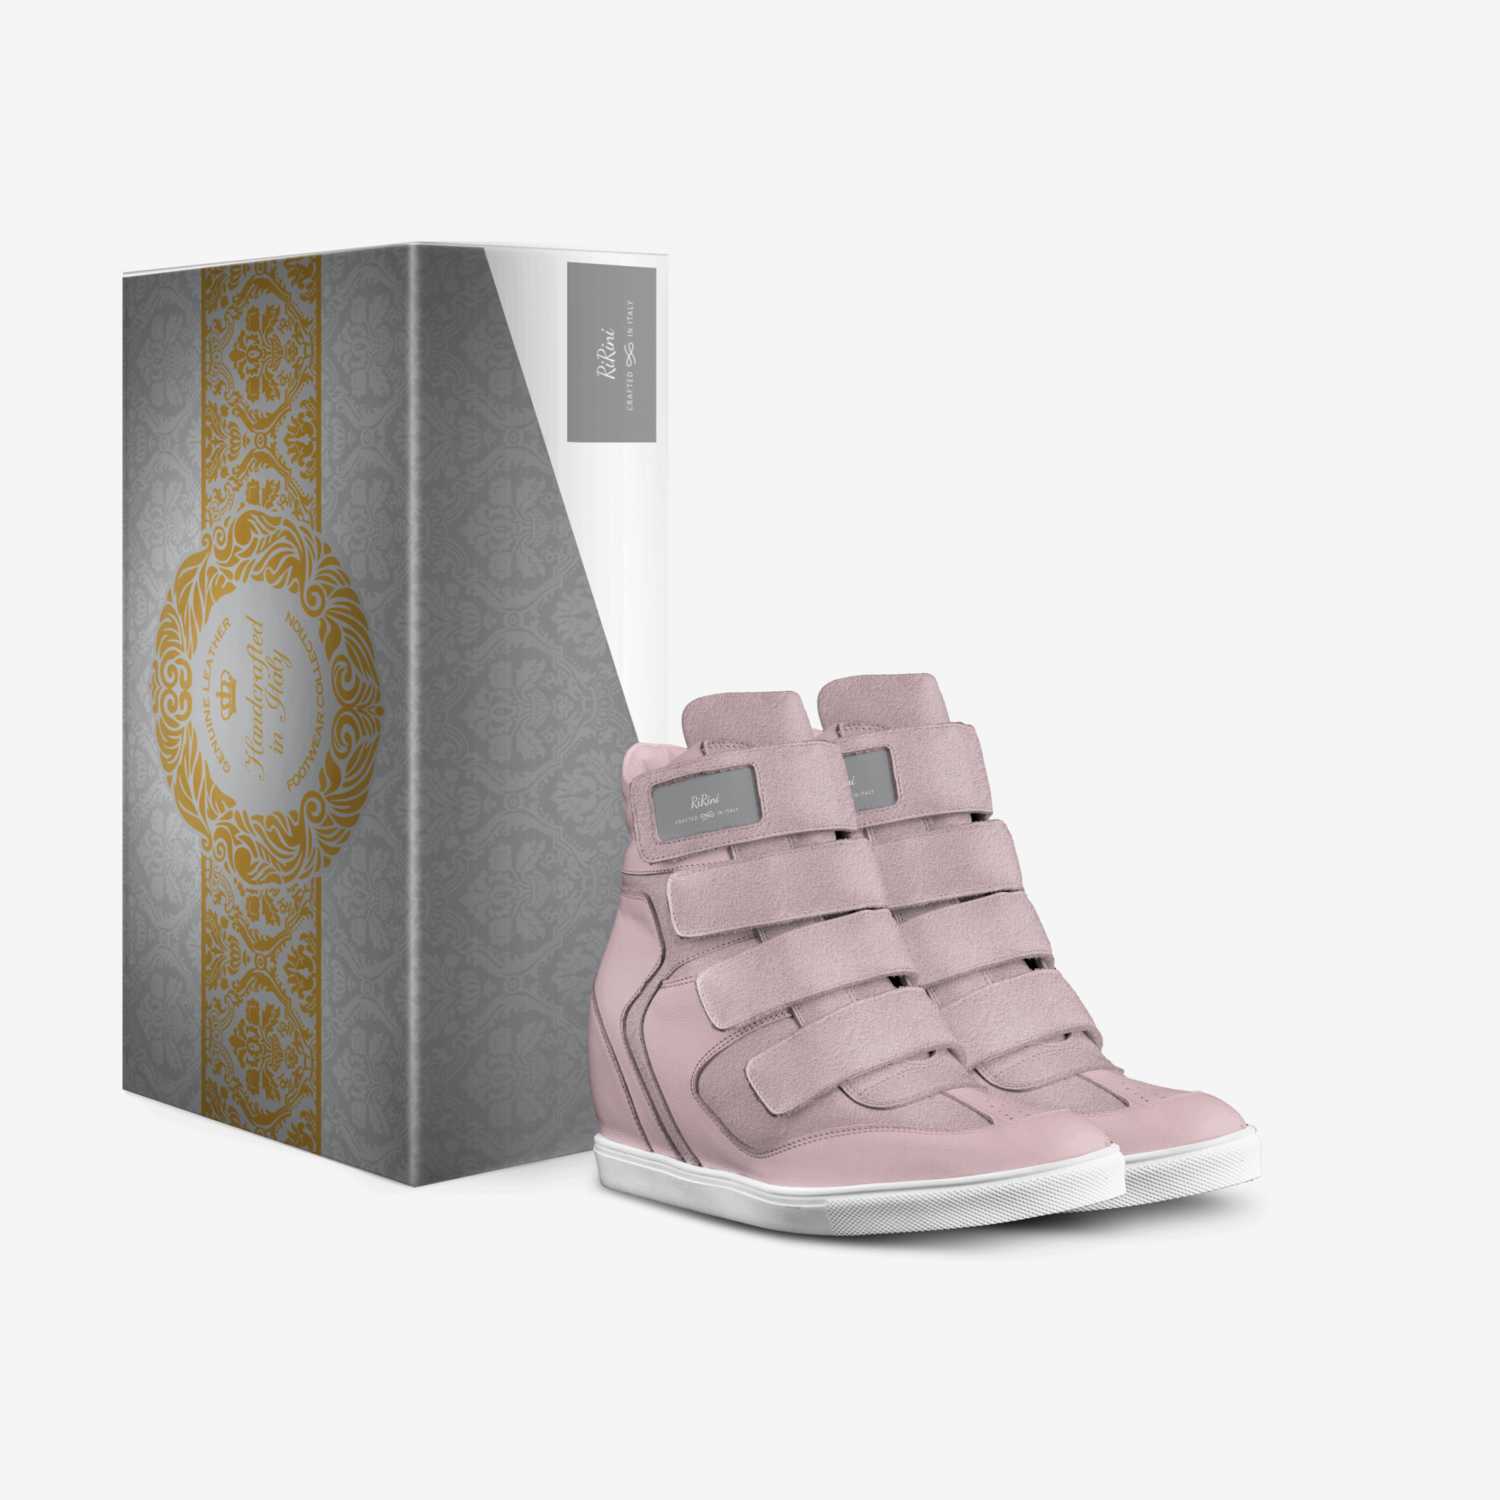 RiRini custom made in Italy shoes by Ririni | Box view